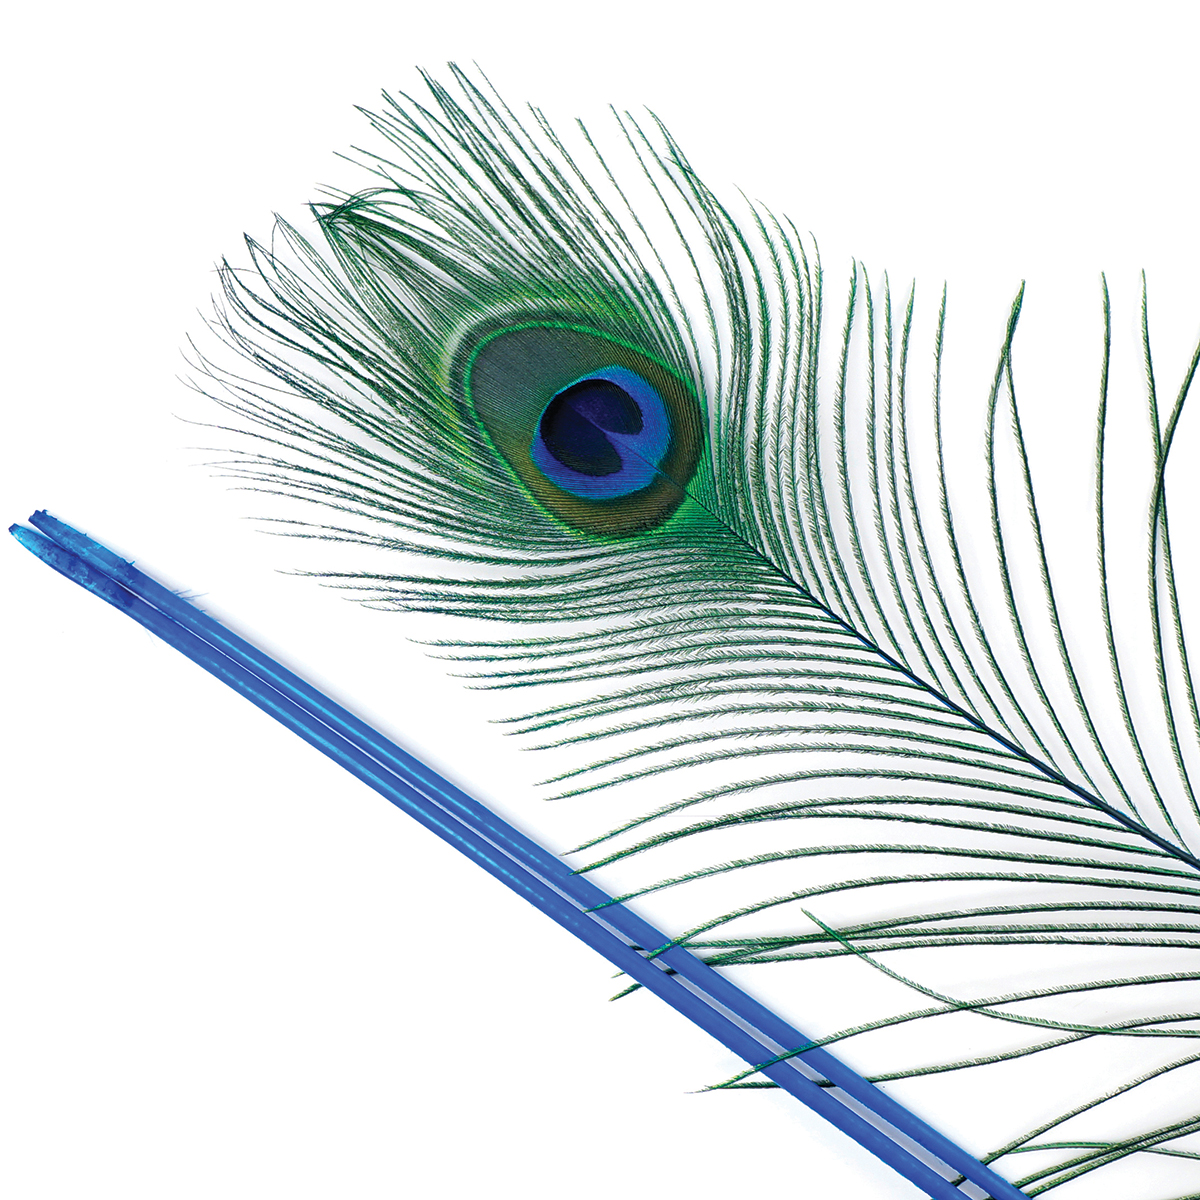 Peacock Eye 30"-40" Stem Dyed 10/Pkg-Dark Turquoise - image 2 of 2